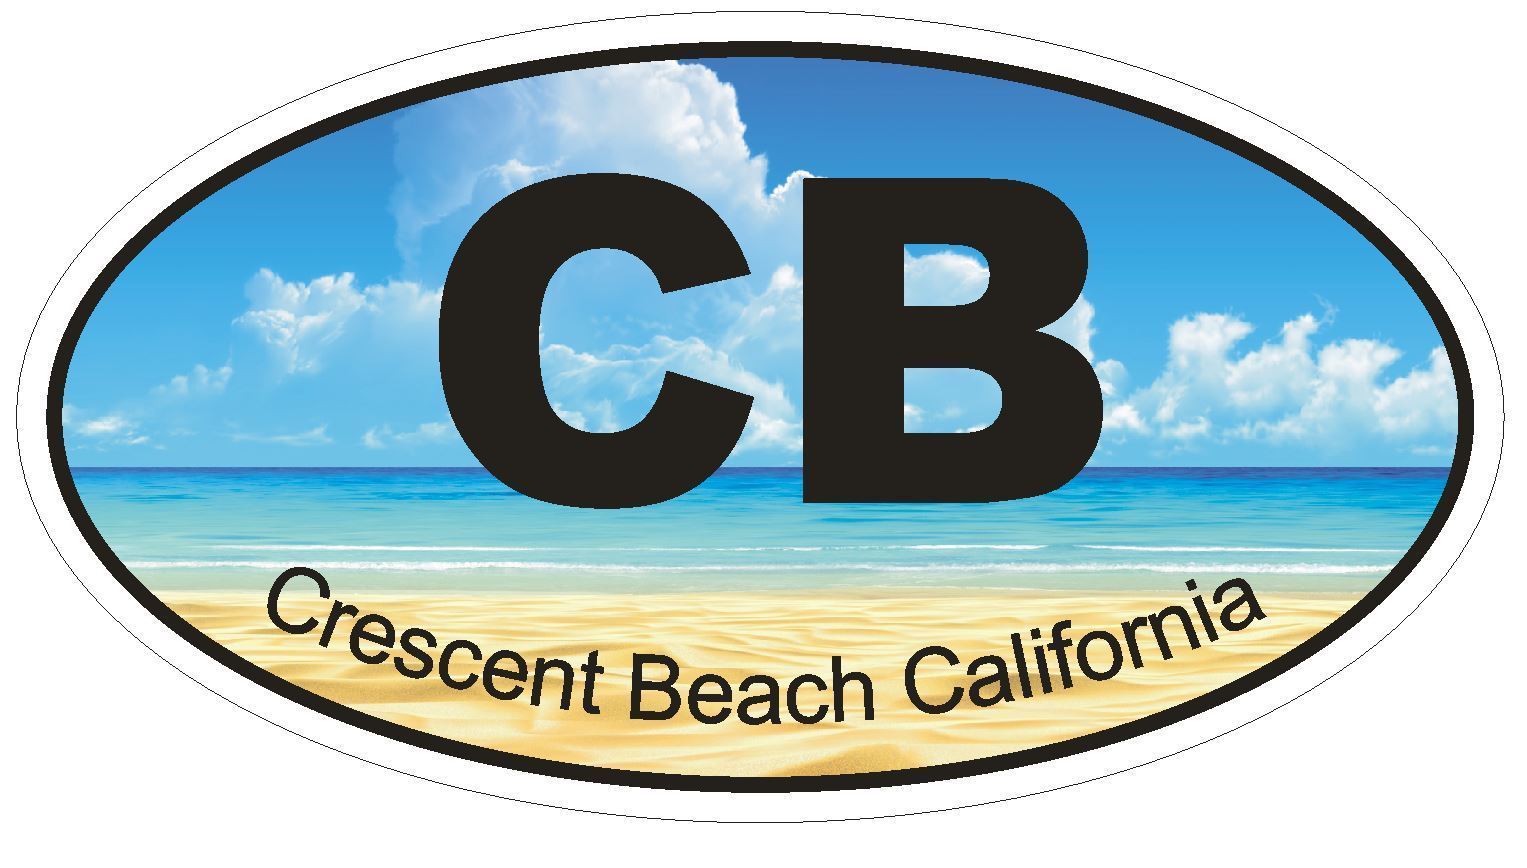 Crescent Beach California Oval Bumper Sticker or Helmet Sticker D1214 Euro Oval - $1.39 - $75.00